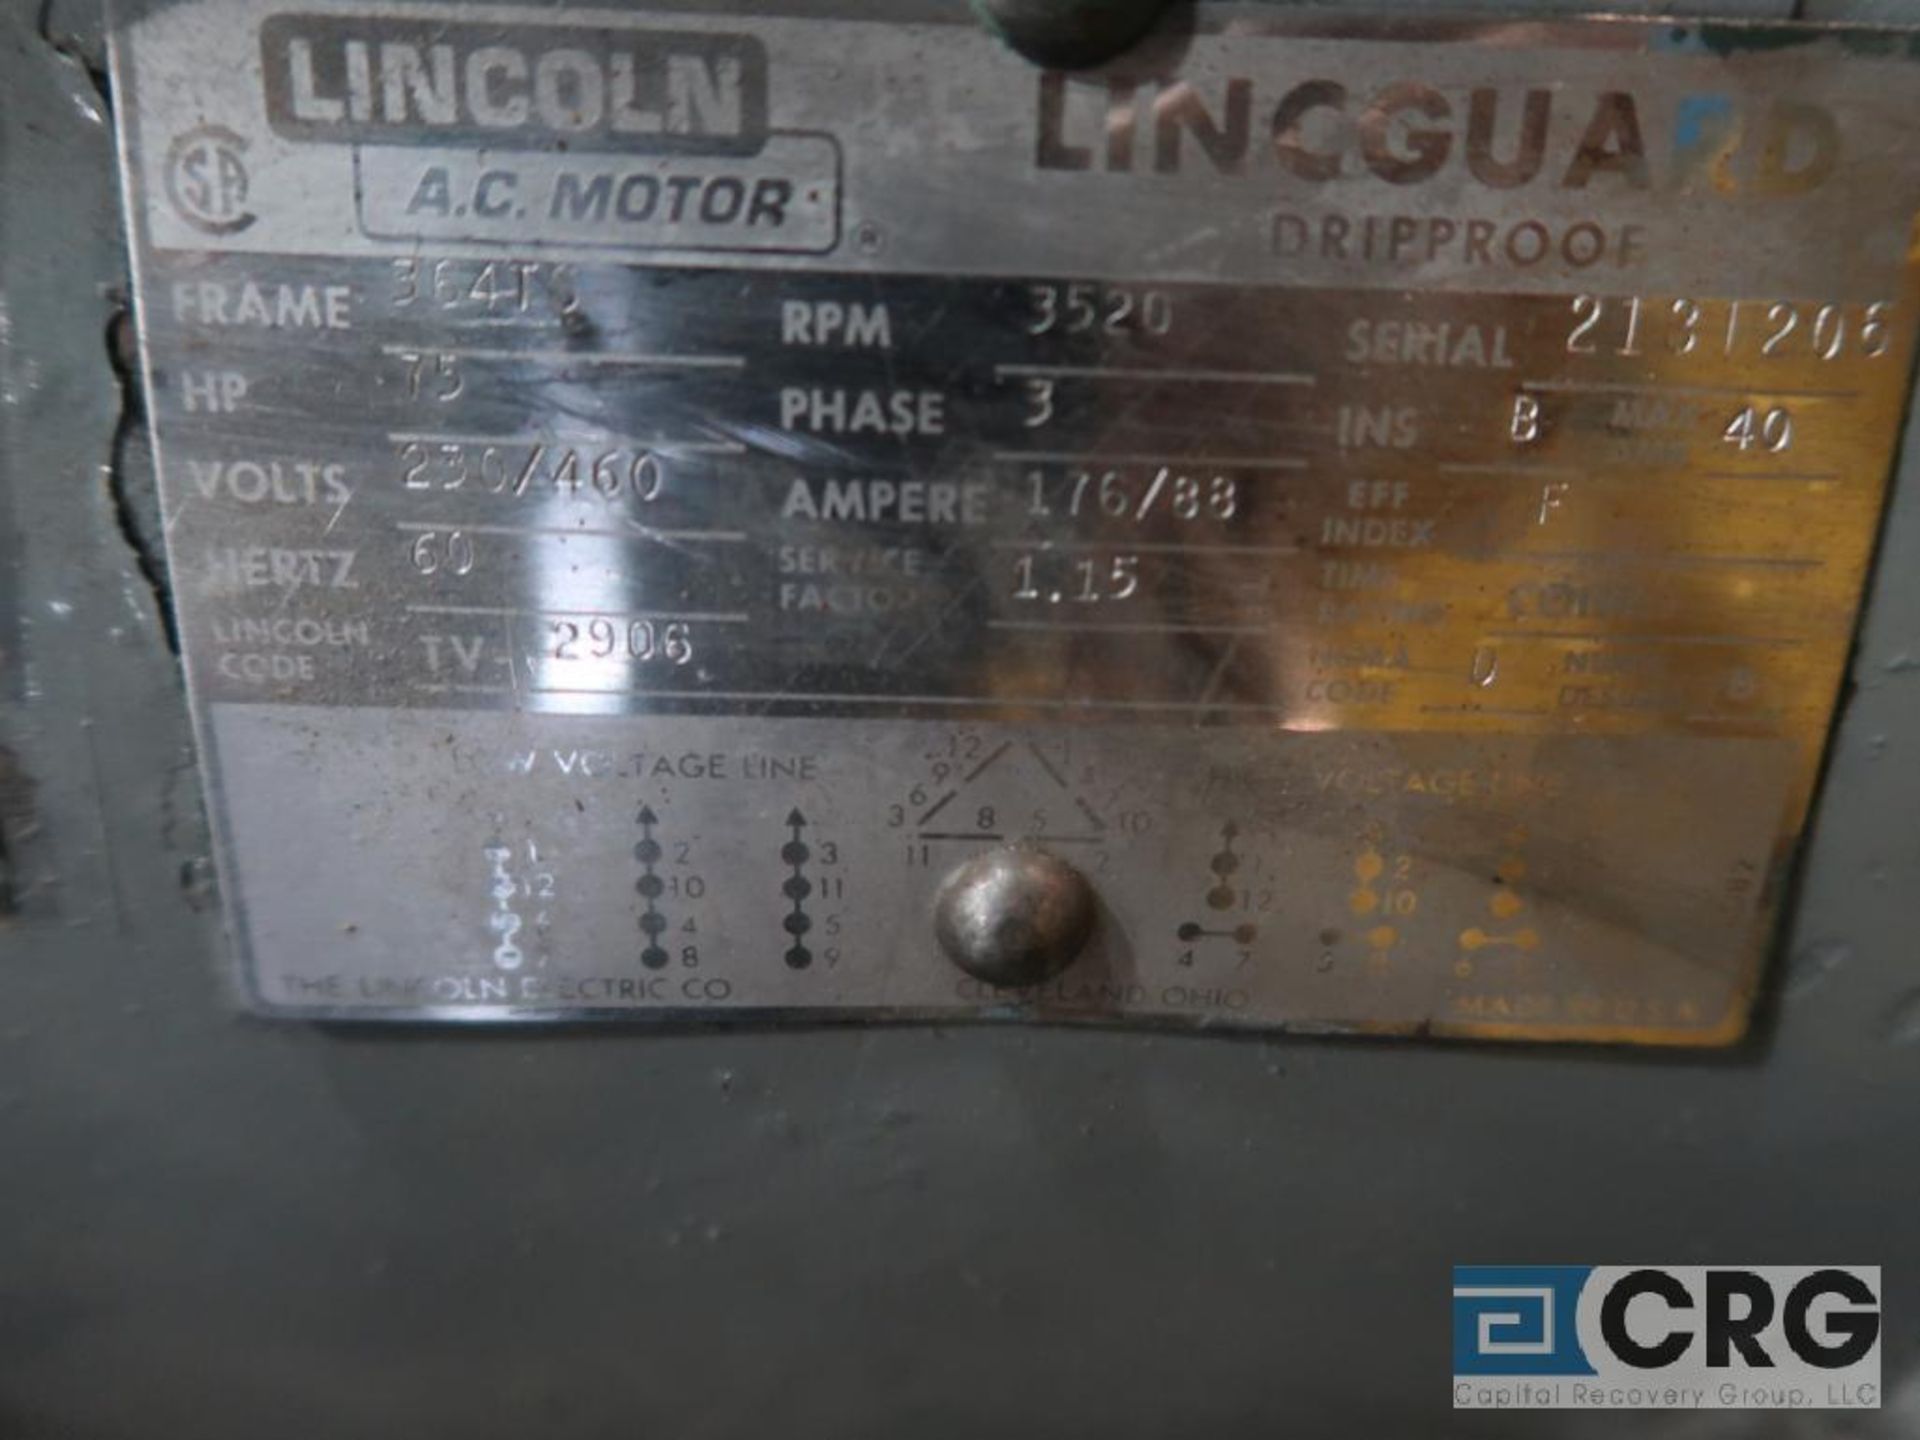 Lincoln A.C. Motors Lineguard Dripproof A.C. motor, 75 HP, 3,520 RPMs, 230/460 volt, 3 ph., 364TS - Image 2 of 2